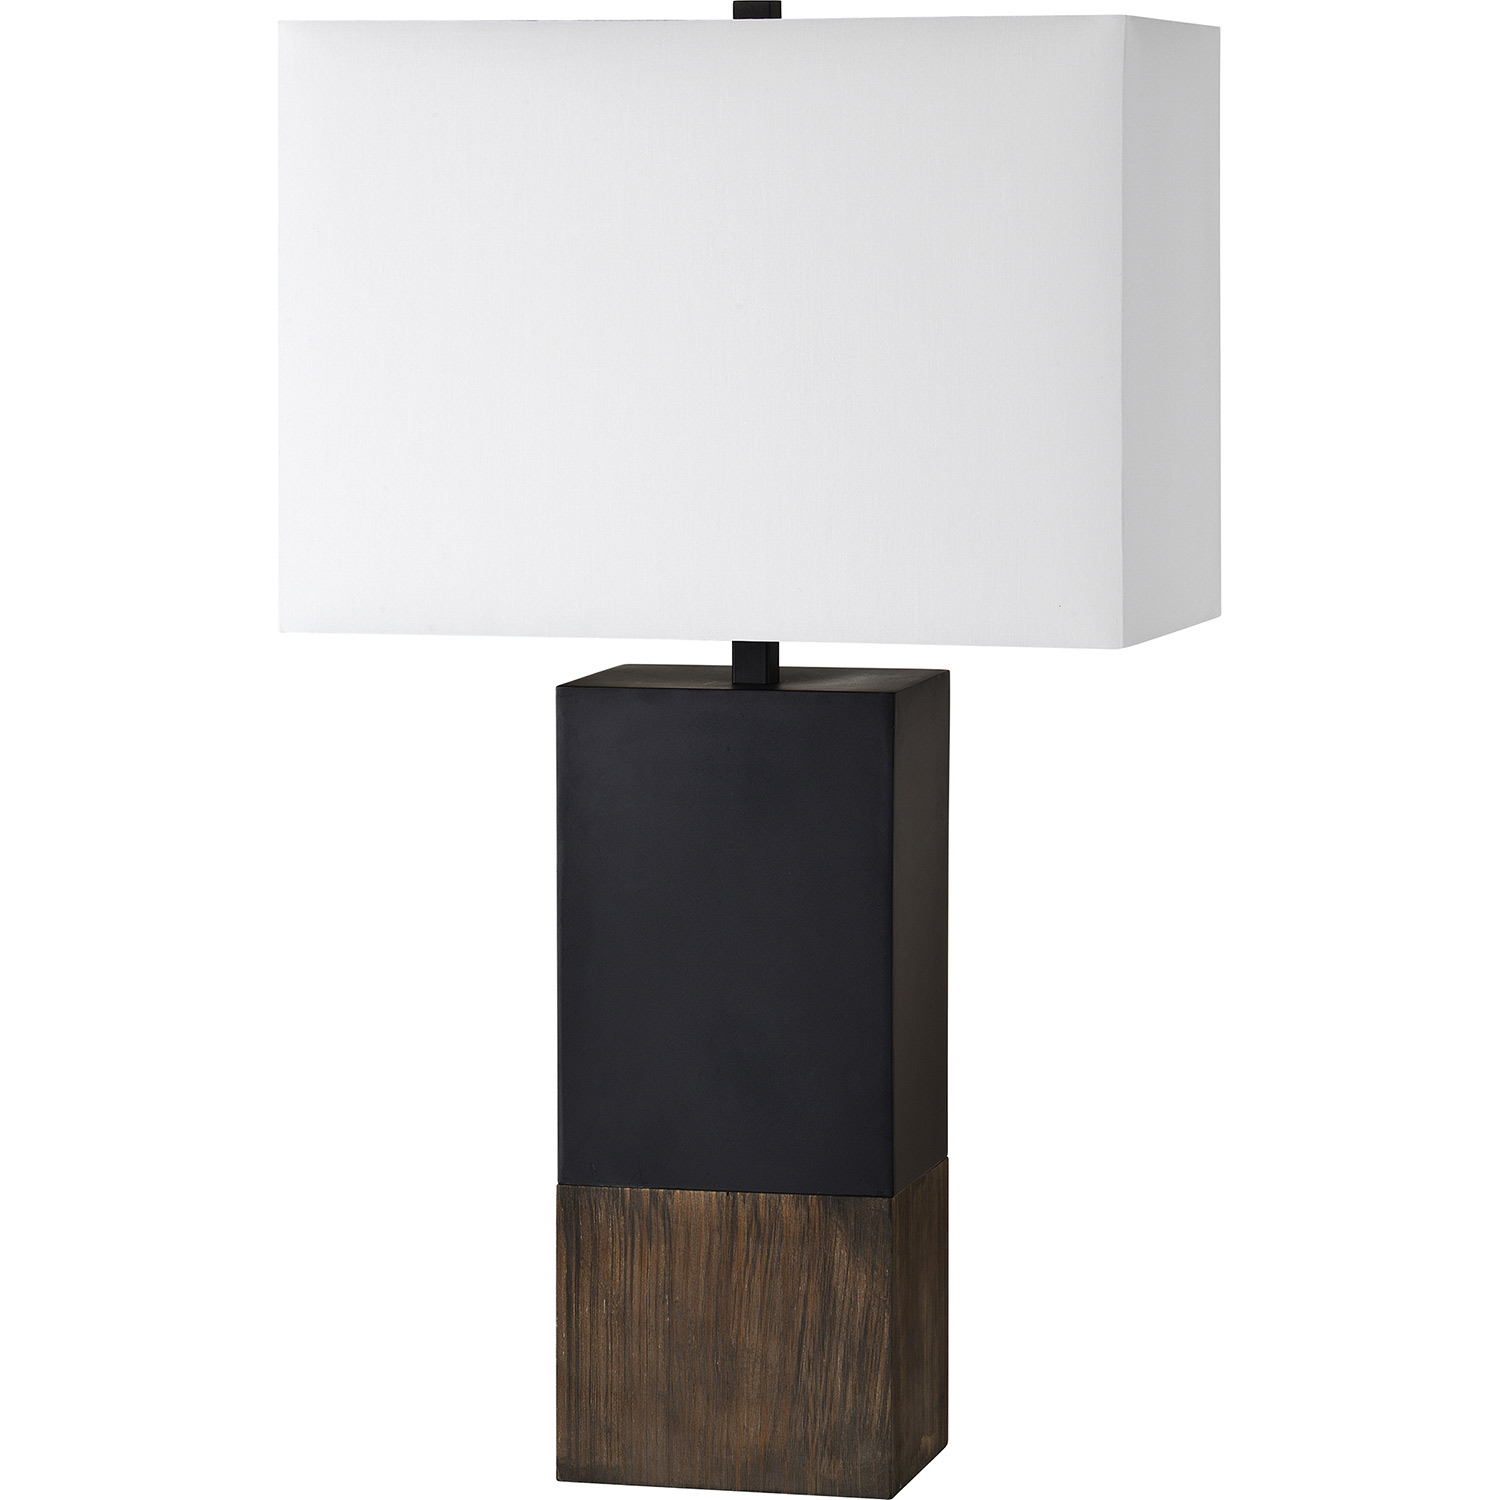 Ren-Wil Table Lamp - Natural/Matte Black